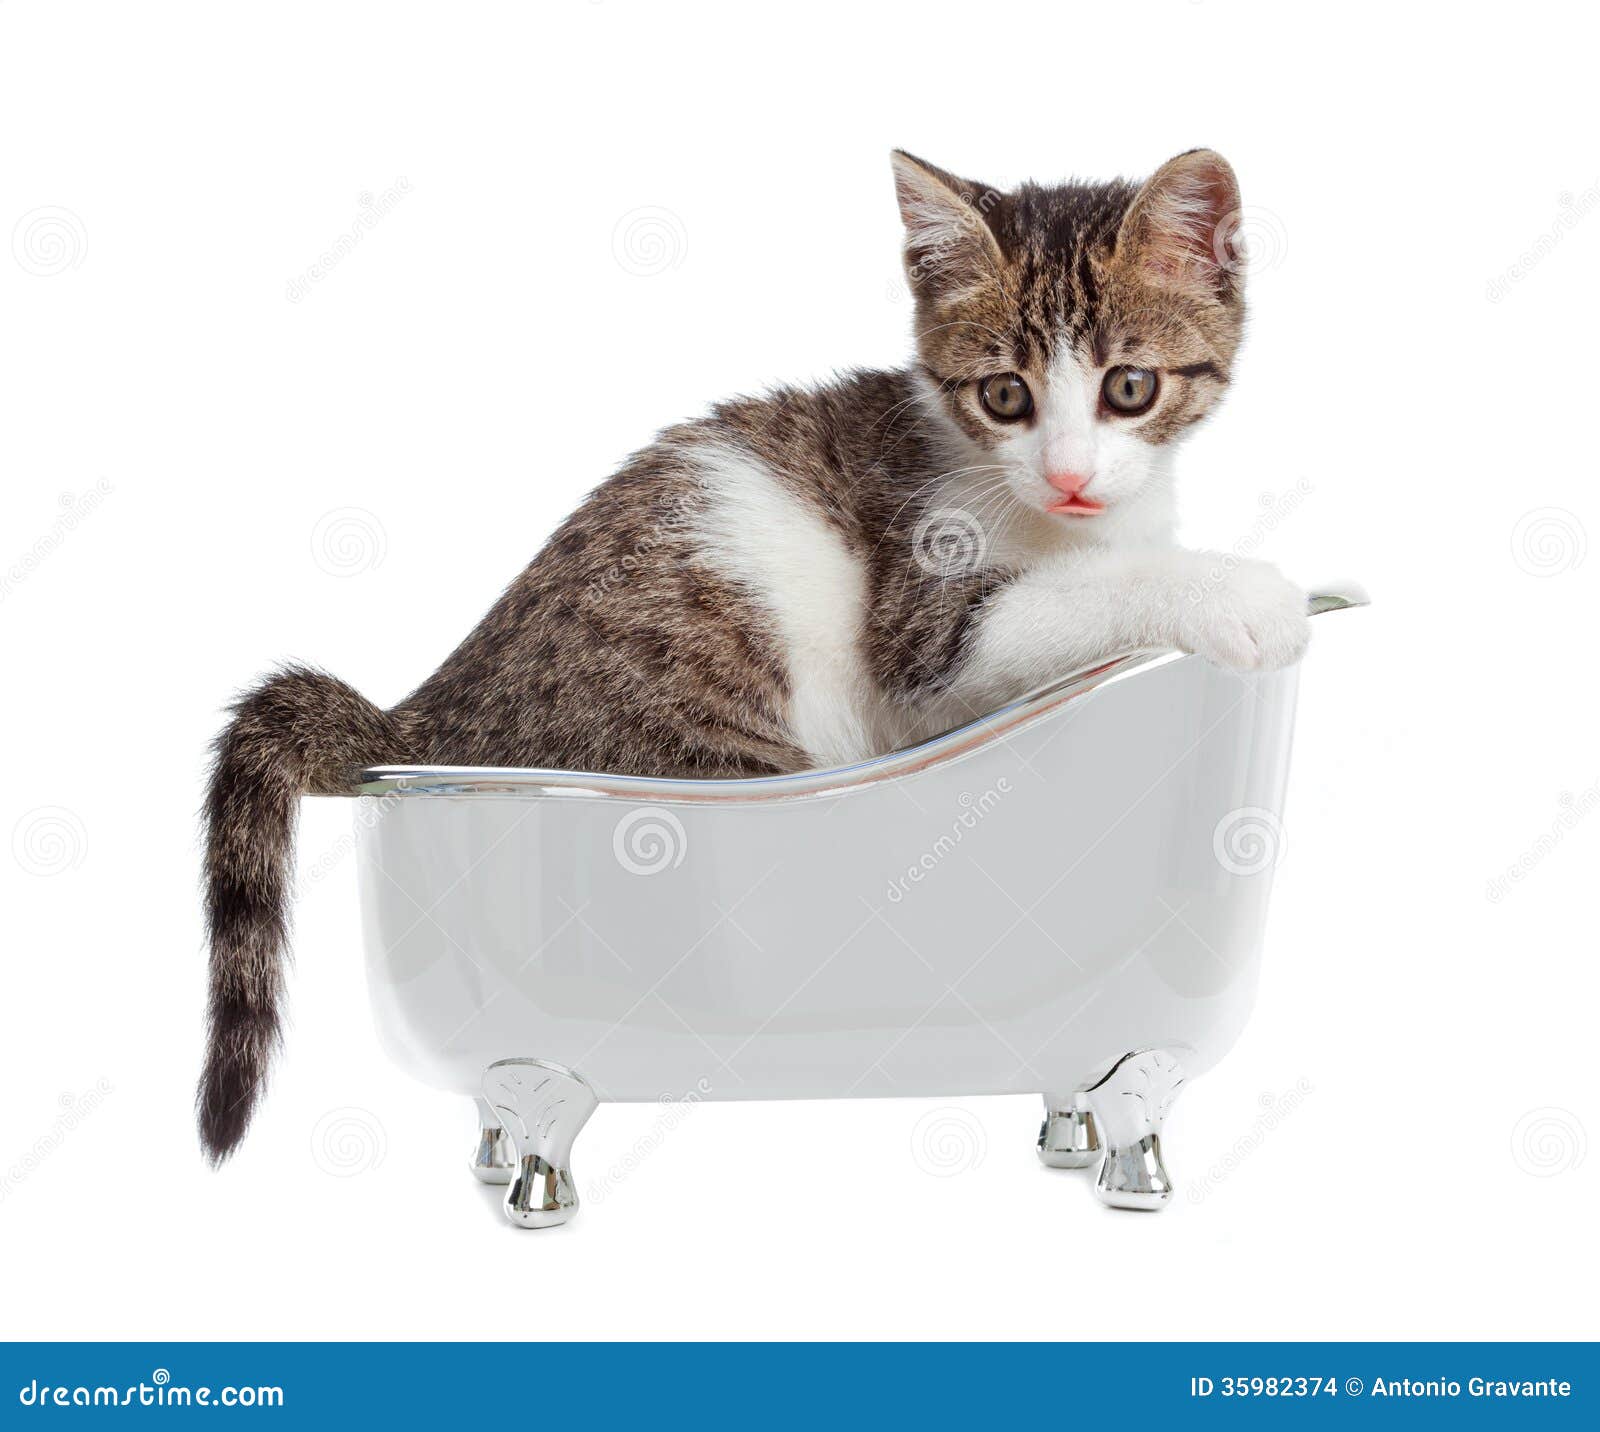 1,638 Cat Bathtub Stock Photos - Free & Royalty-Free Stock Photos from  Dreamstime